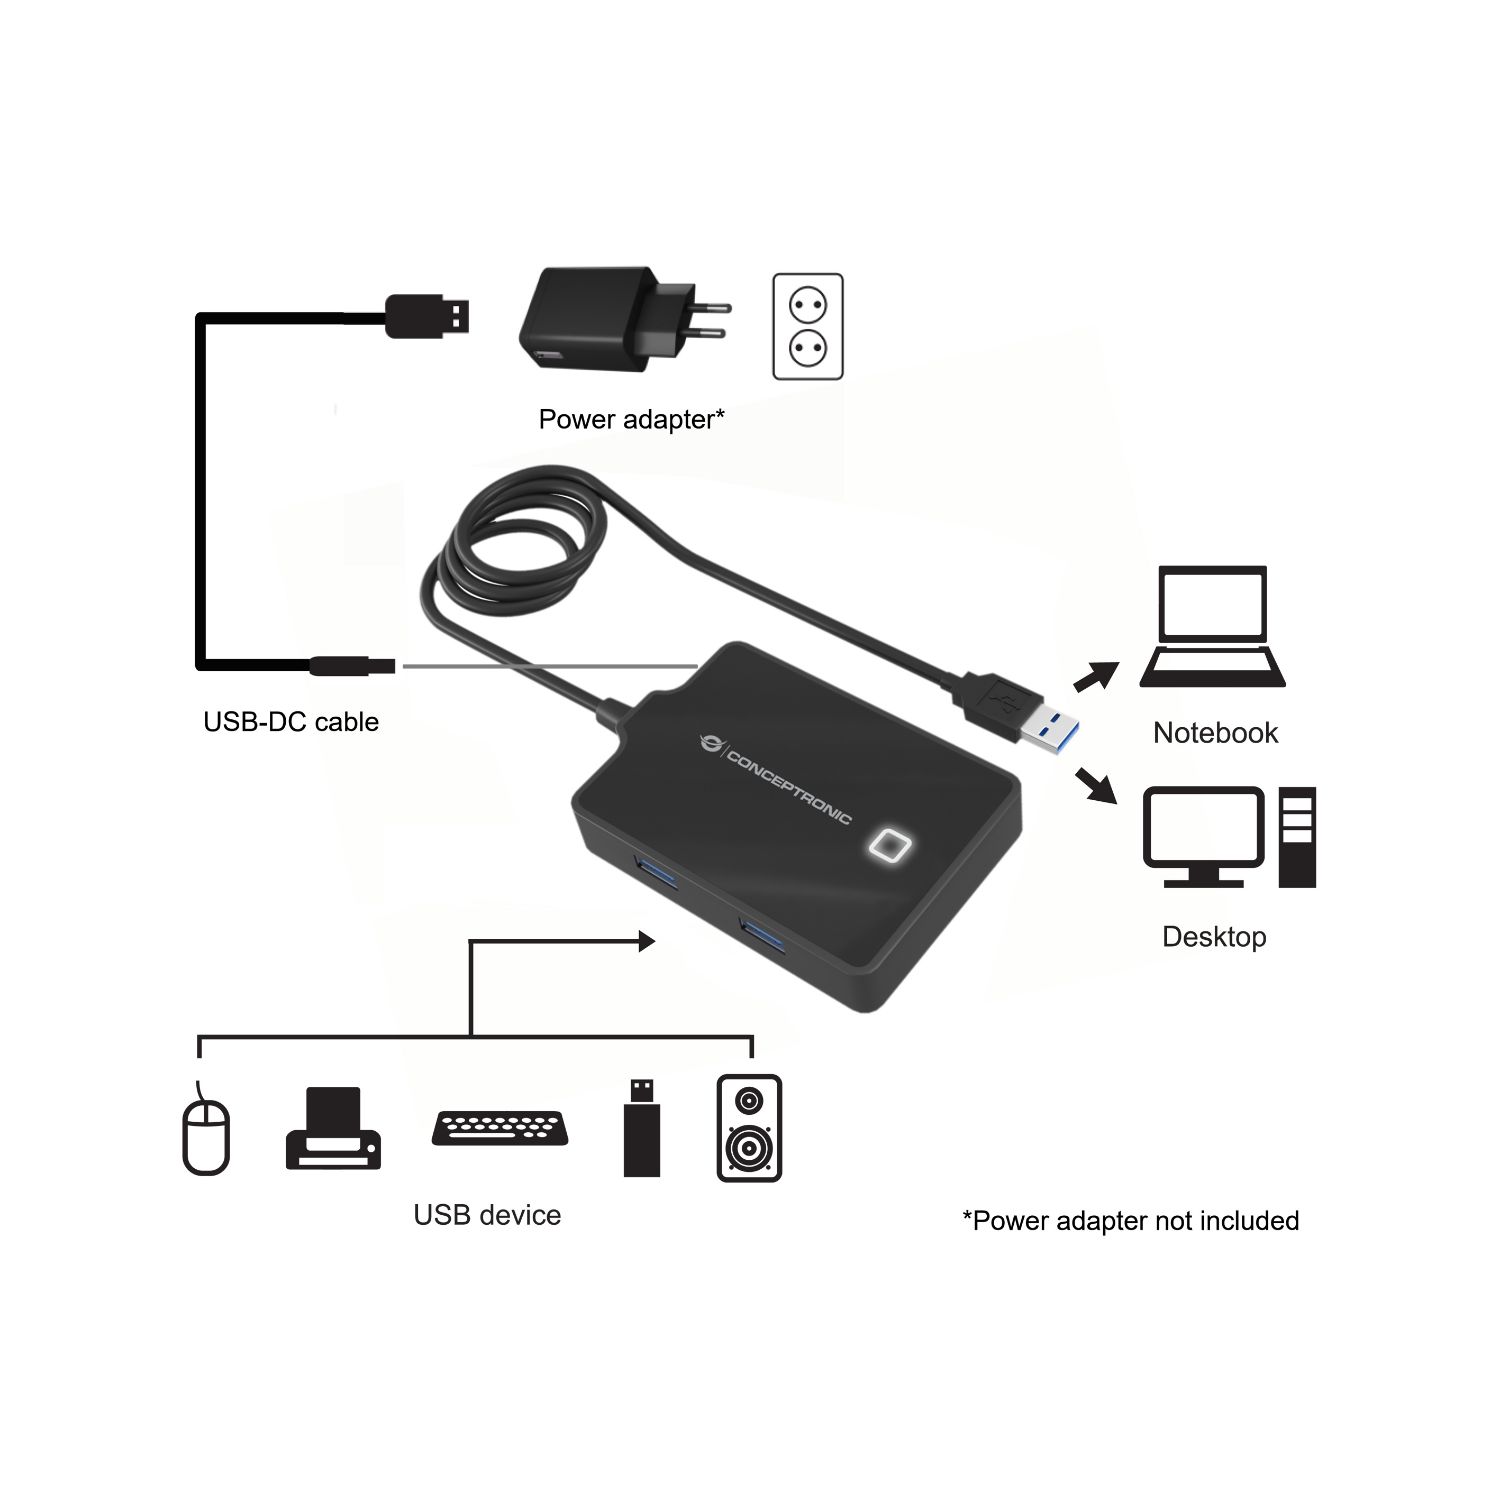 HUBBIES11B - Hub CONCEPTRONIC USB-A 3.0 a 4xUSB-A 3.0 90cm Negro (HUBBIES11B)